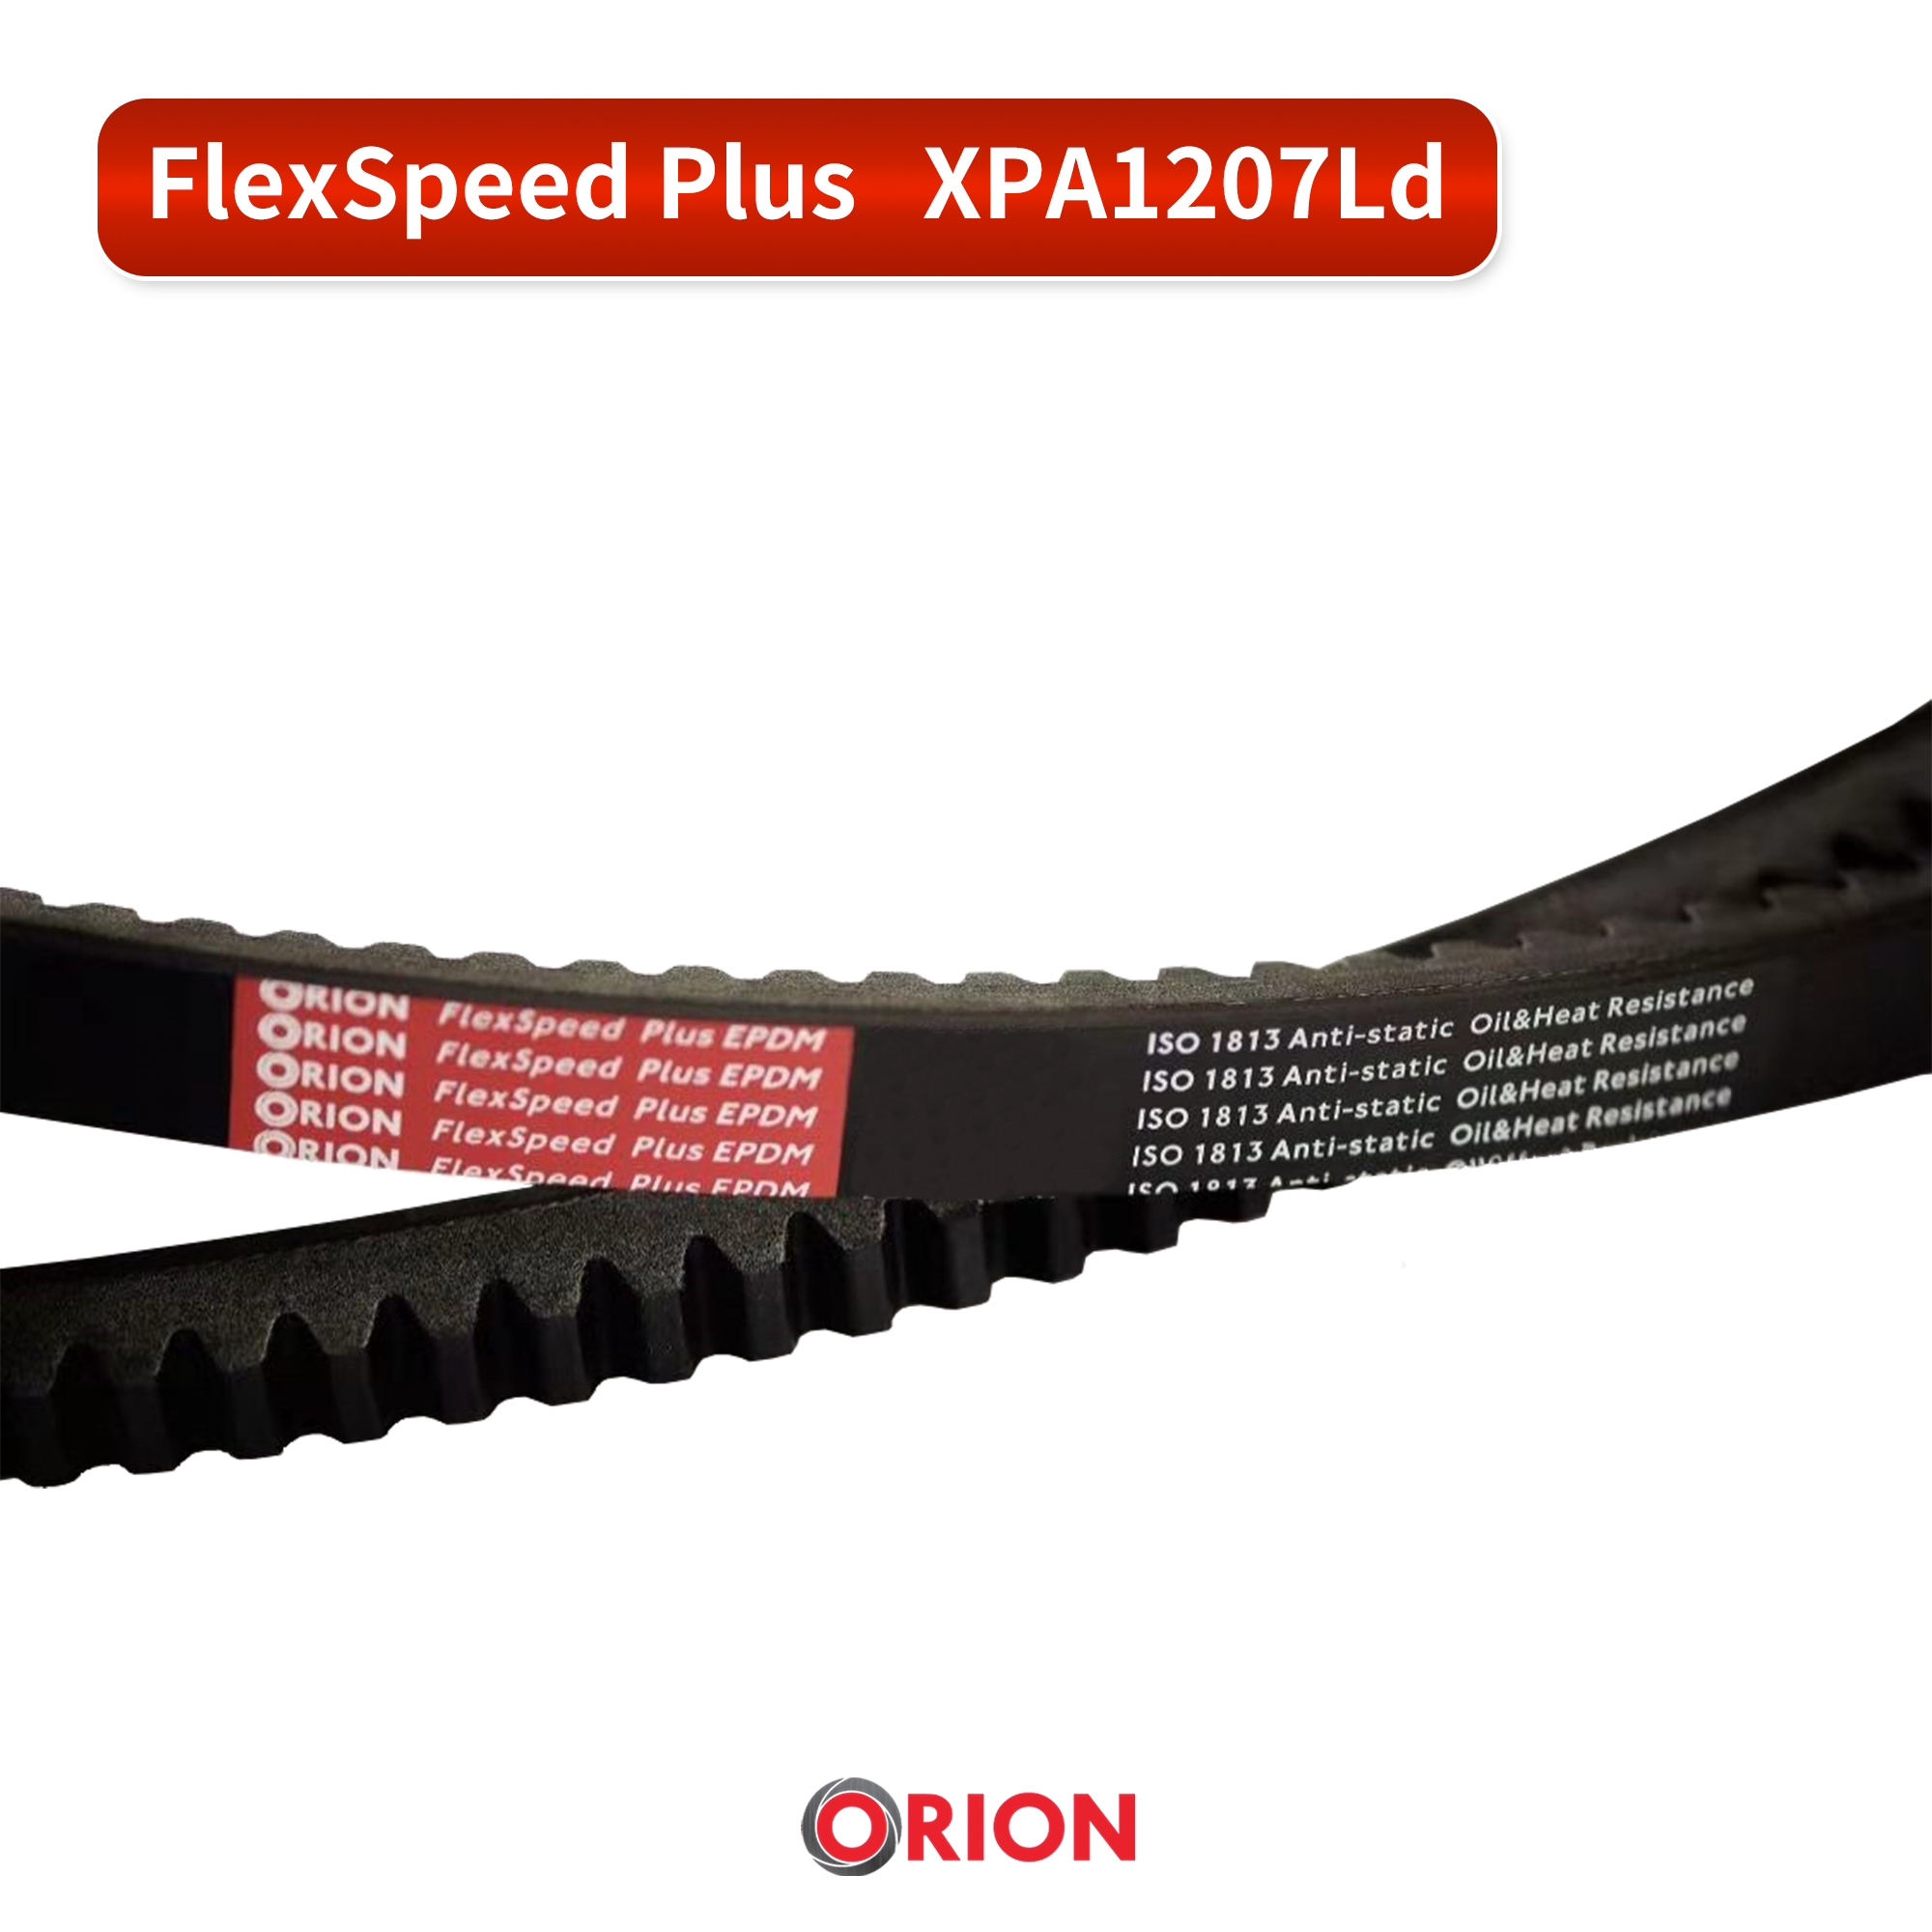 ORION FlexSpeed Plus XPA1207 Ld （红标）